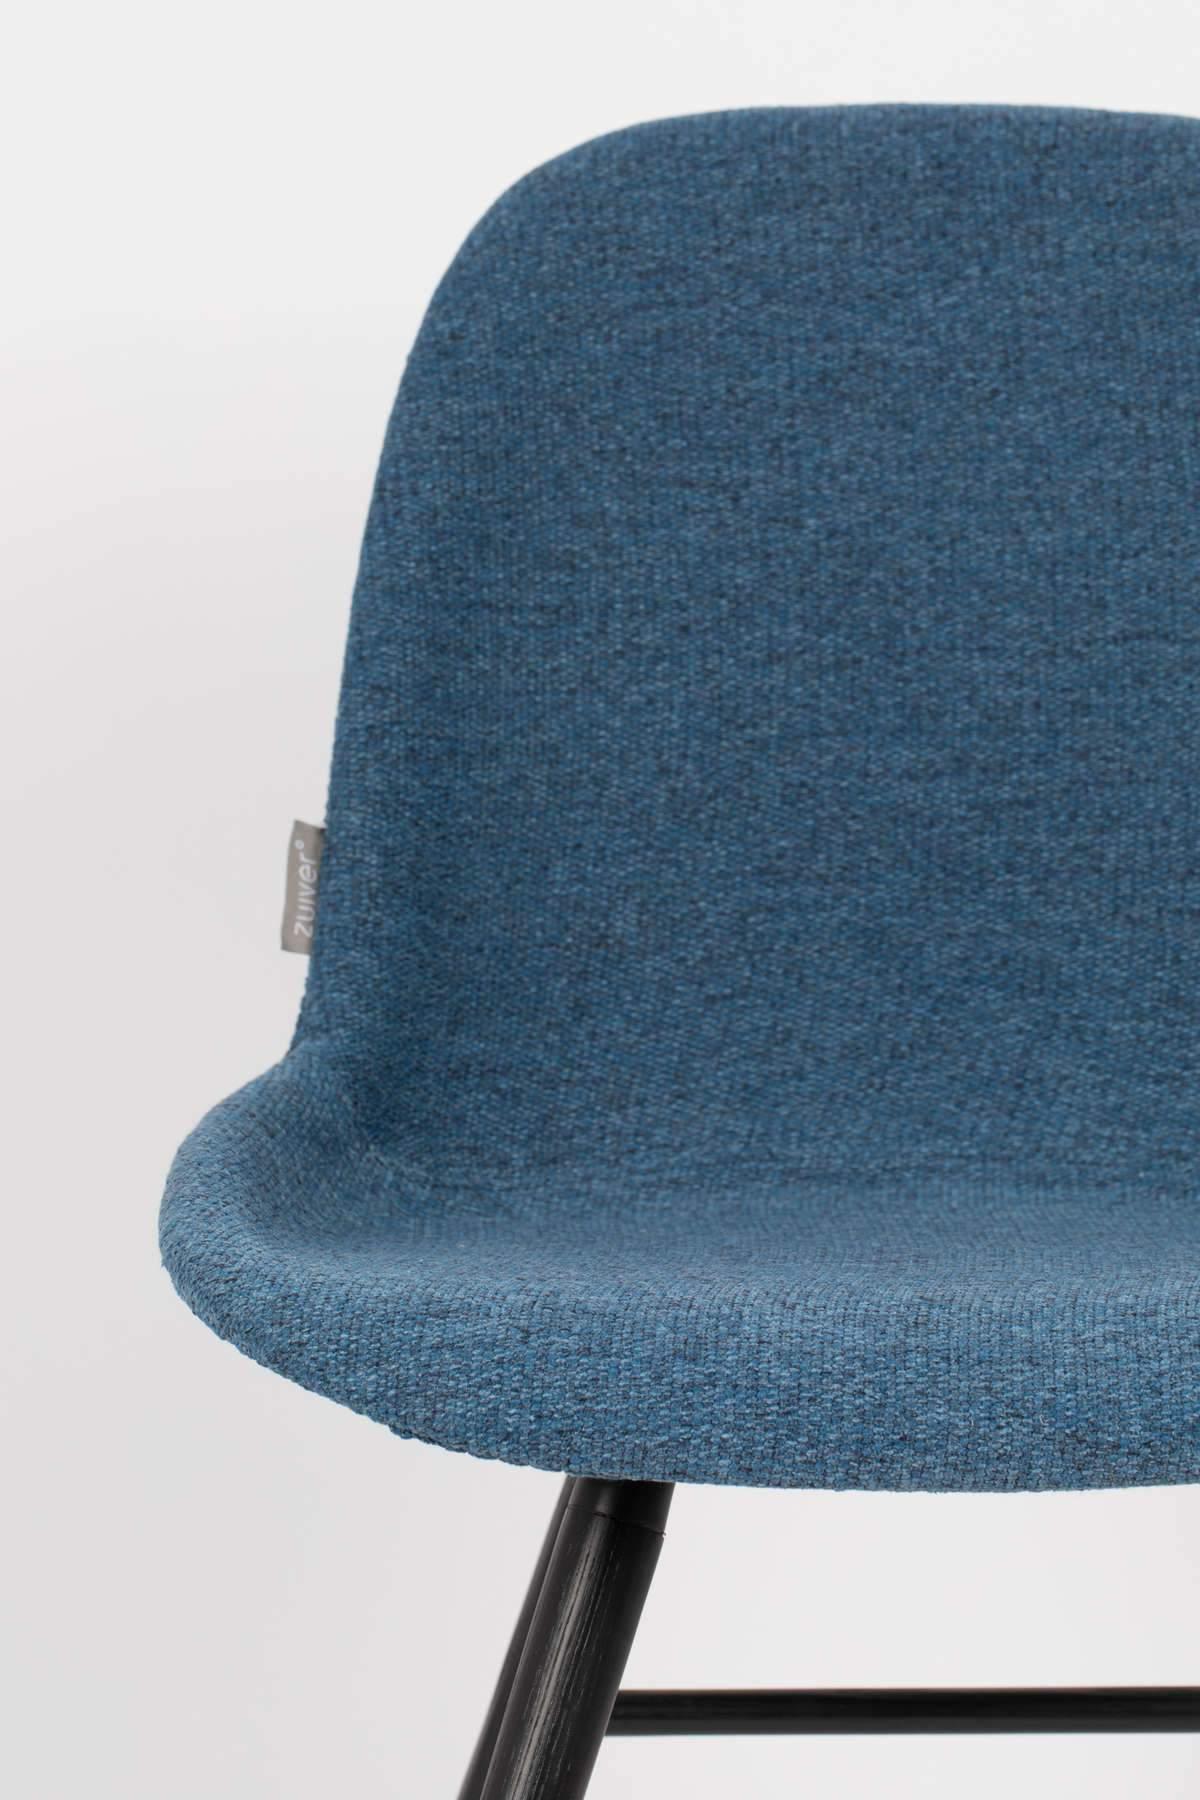 Krzesło ALBERT KUIP SOFT niebieski, Zuiver, Eye on Design